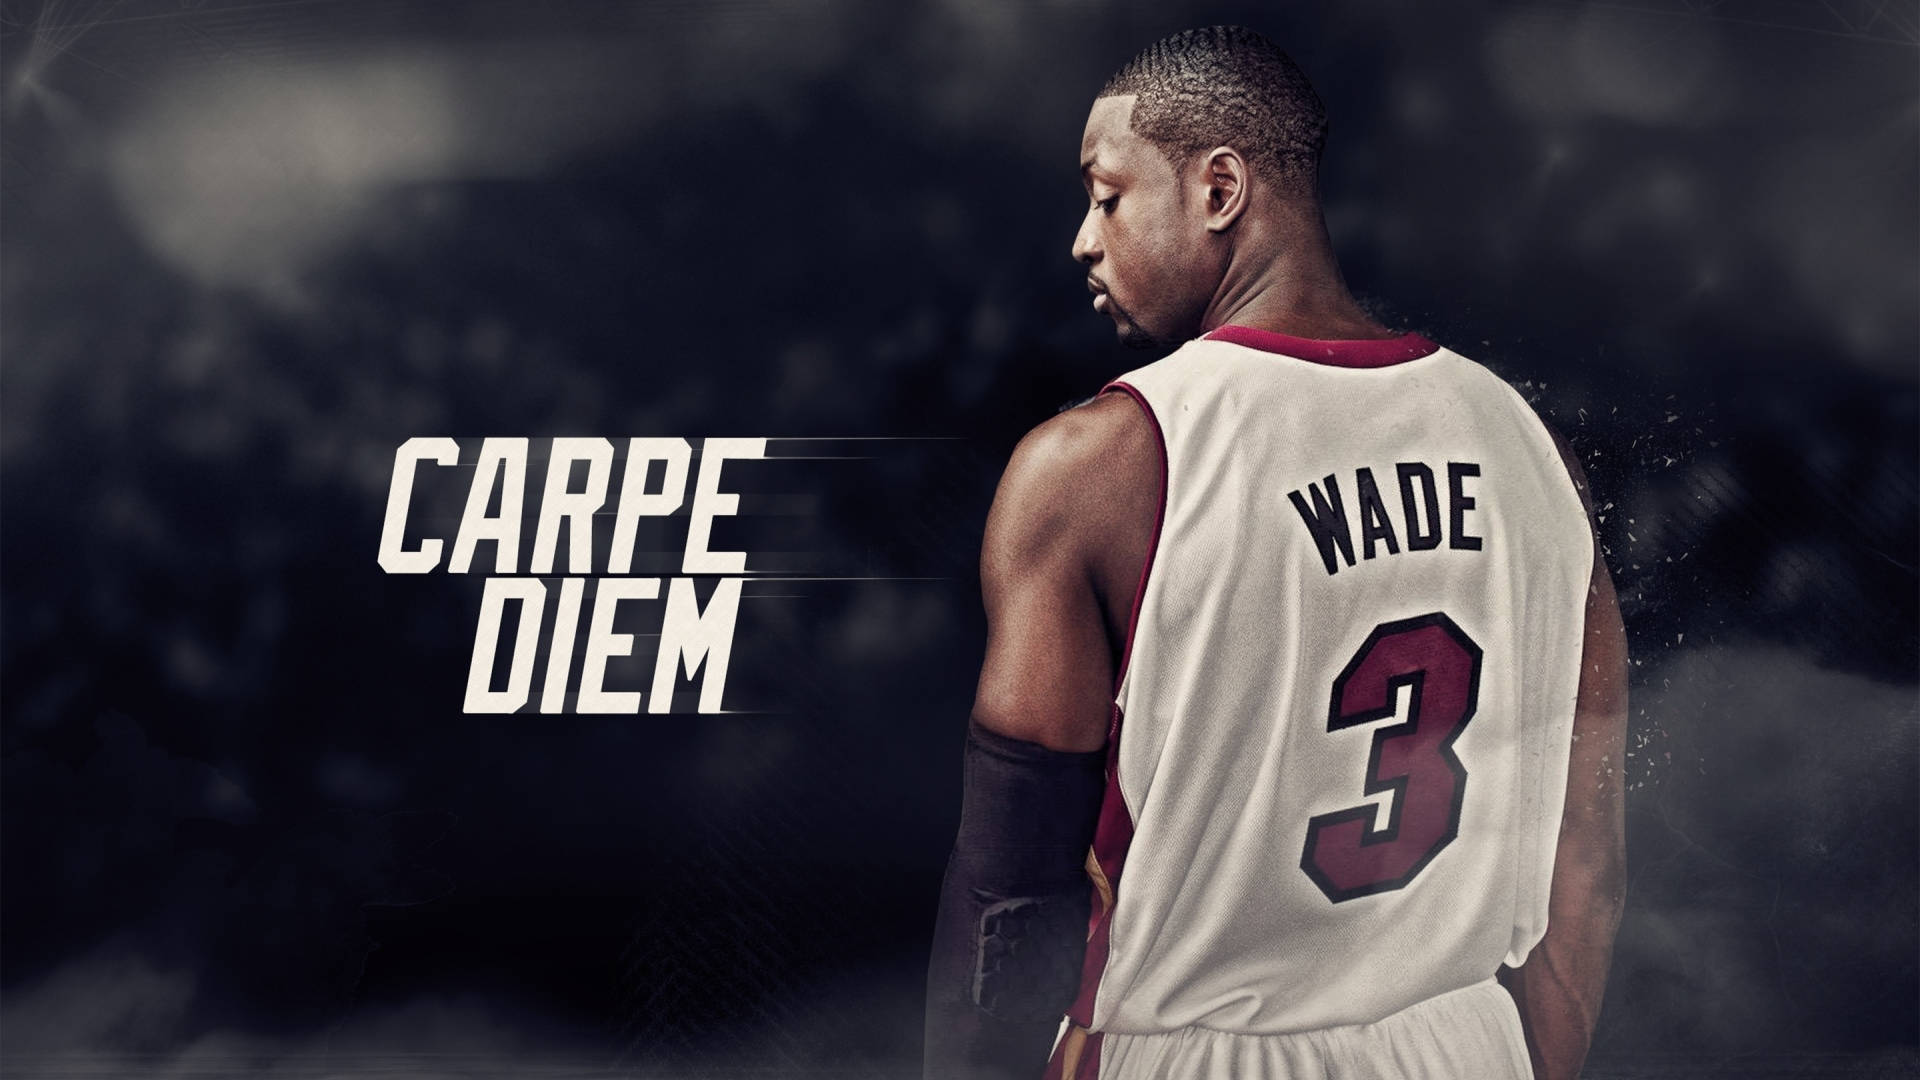 Miami Heat Player Dwayne Wade Background